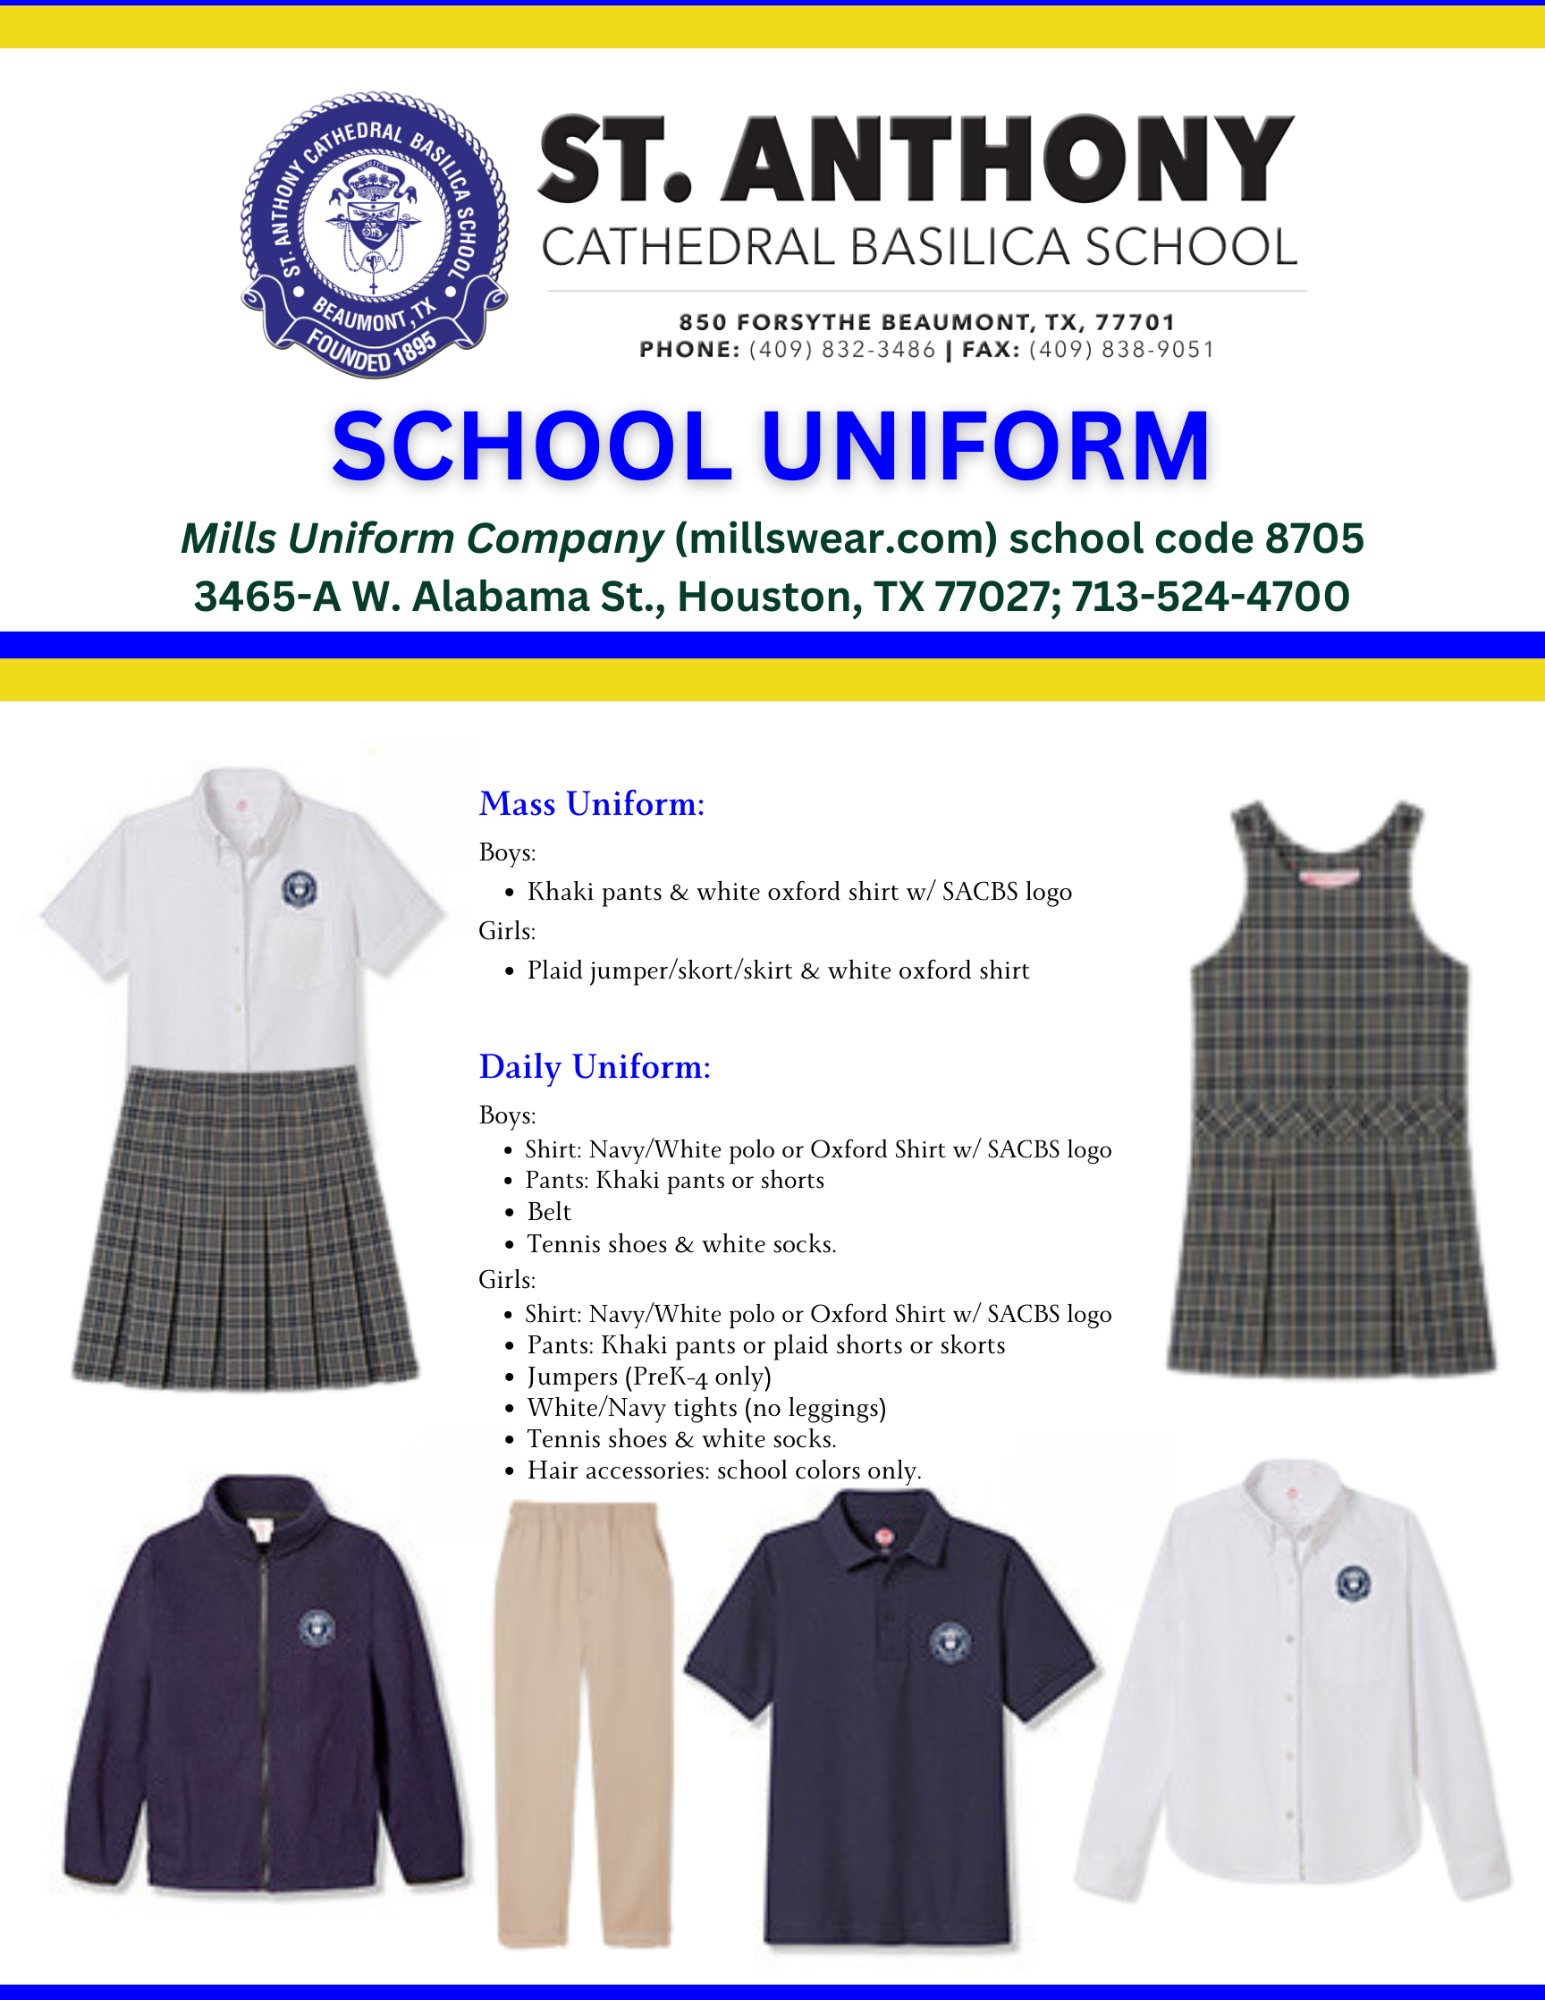 uniforms-look-like